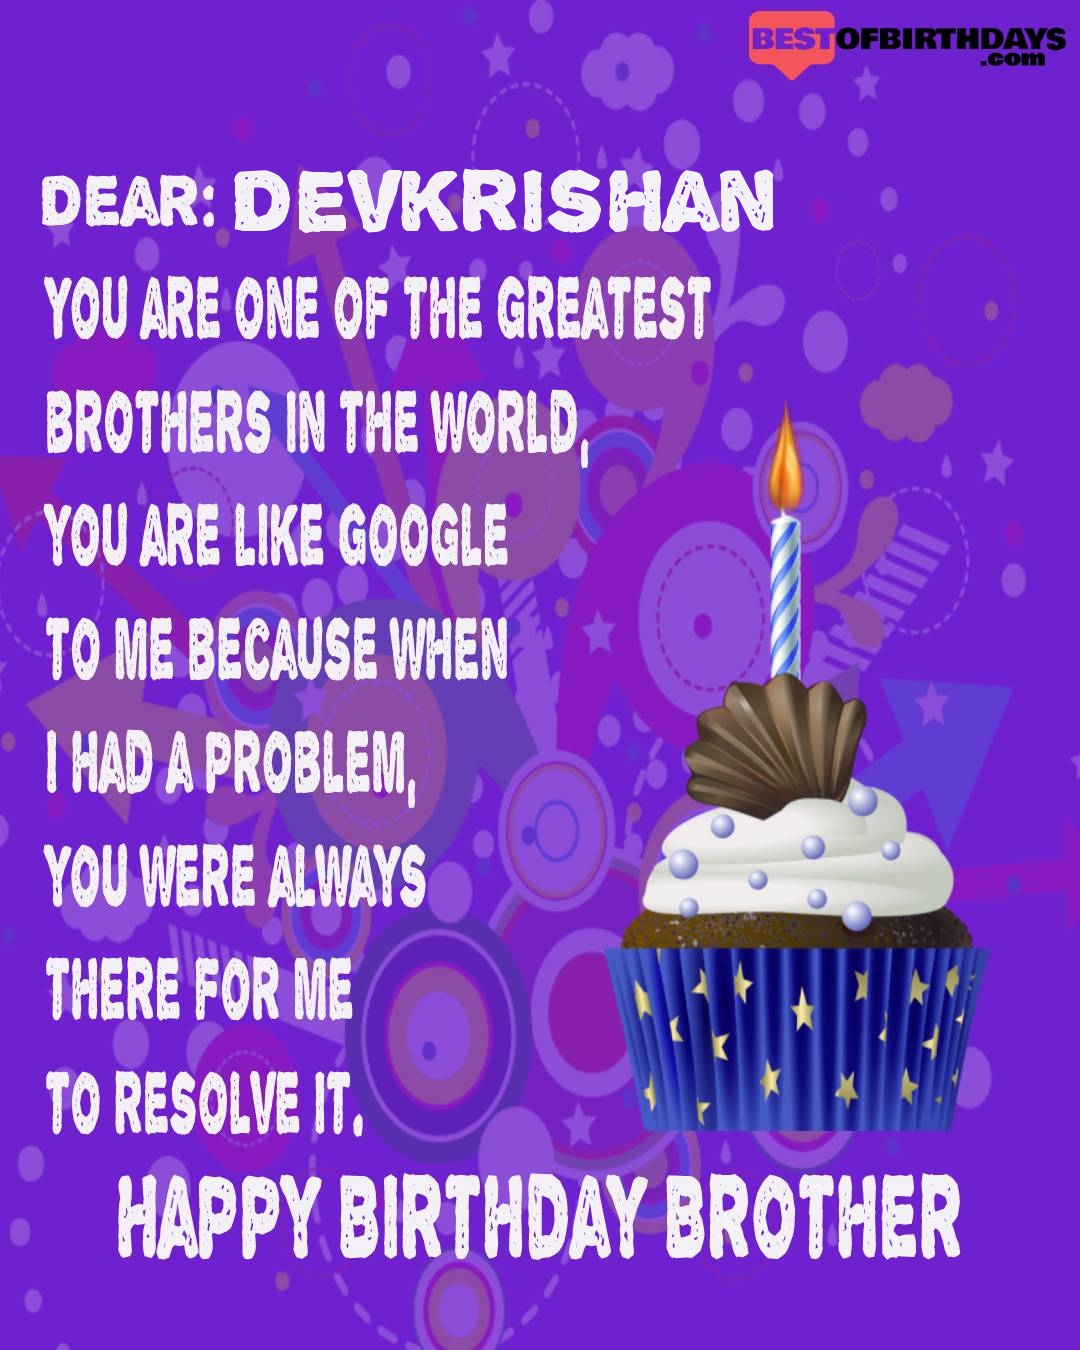 Happy birthday devkrishan bhai brother bro